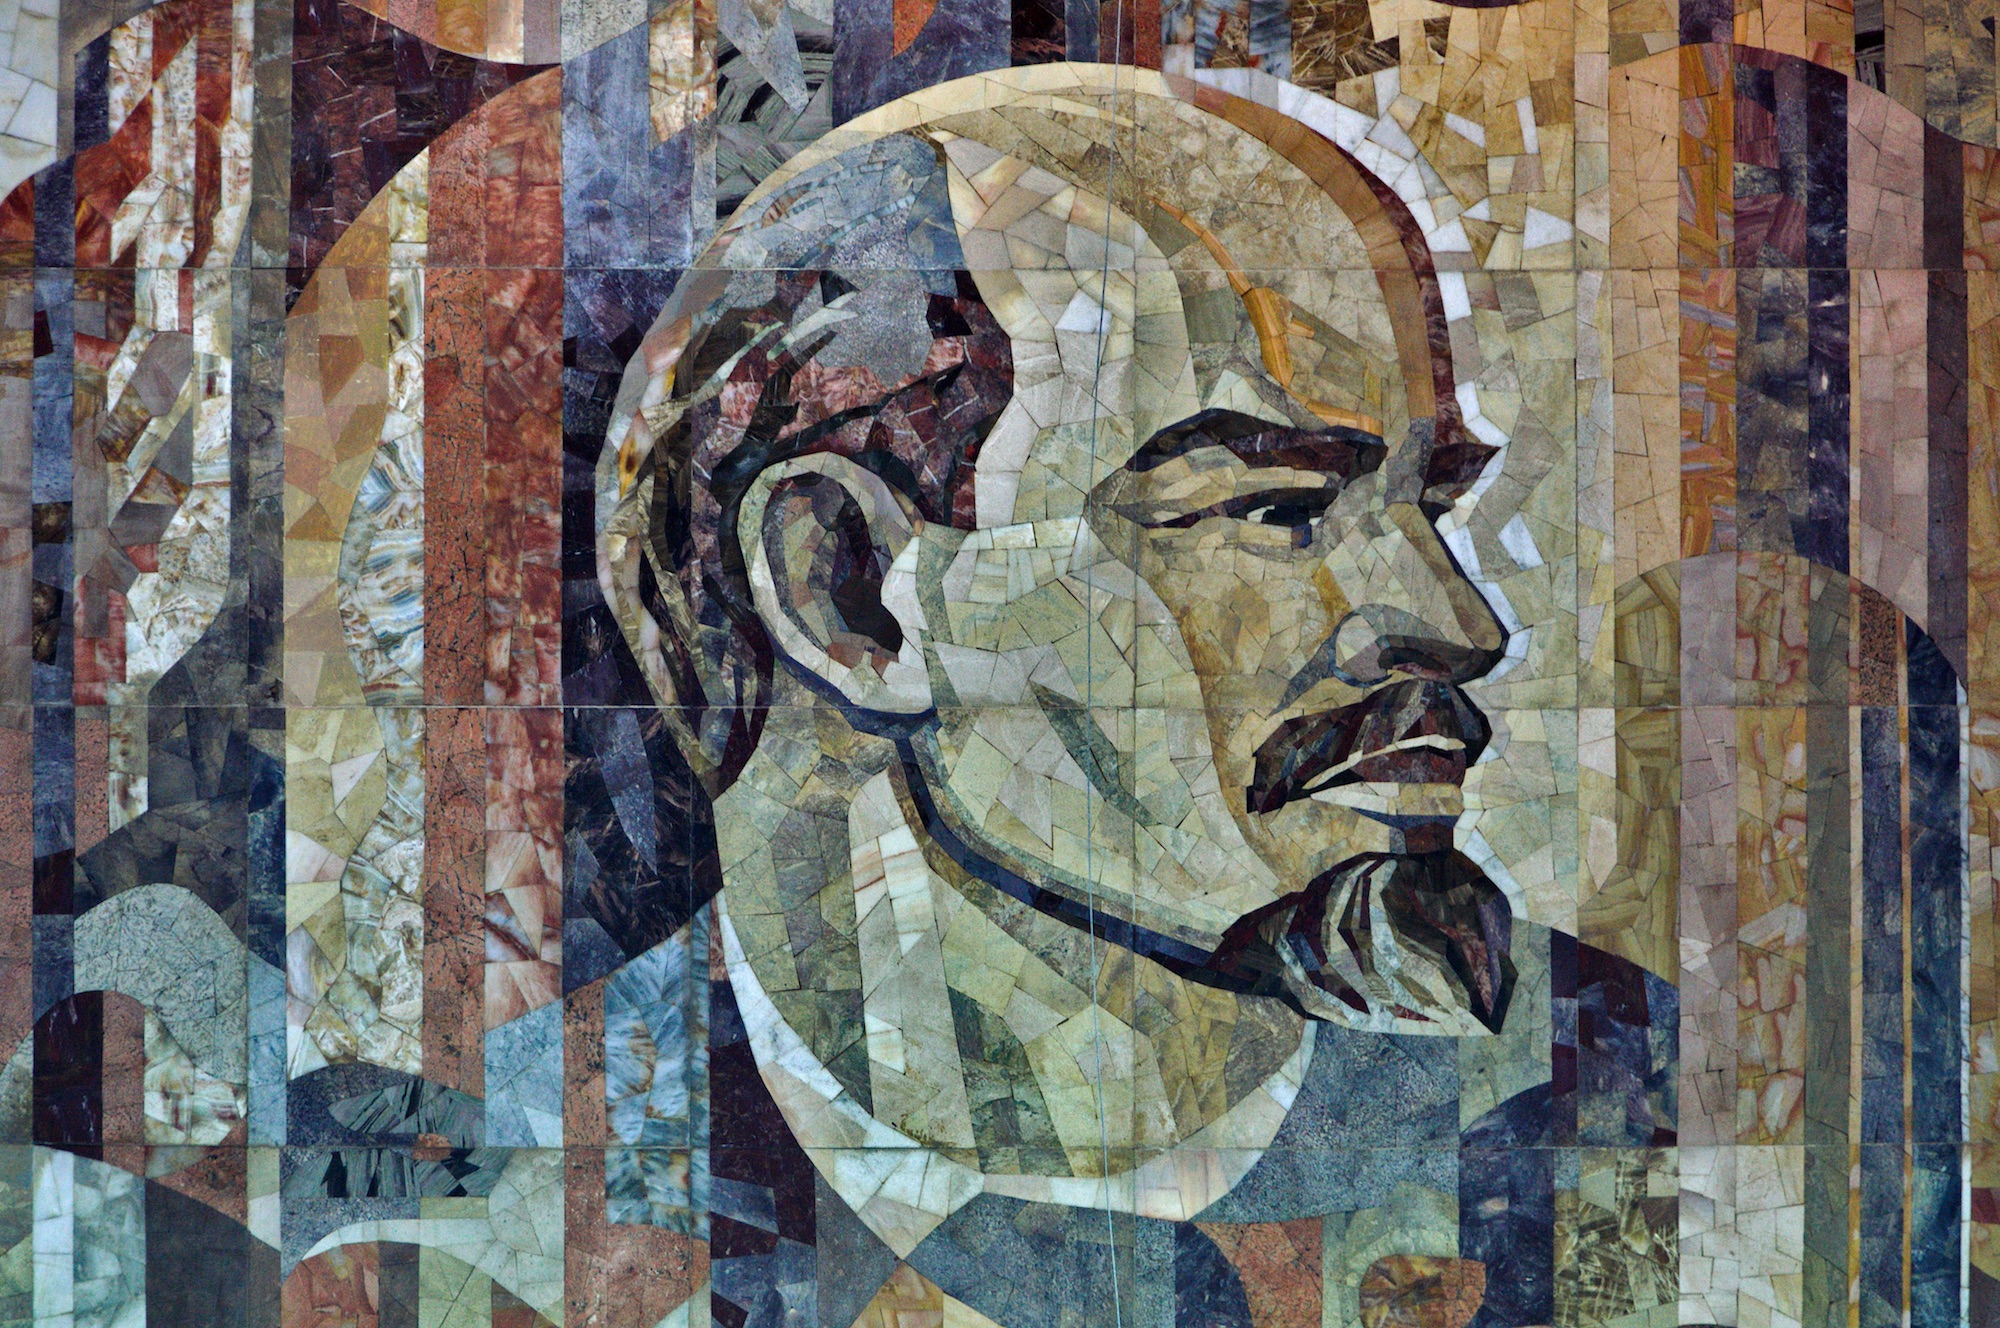 V. I. Lenin by Boris Anisimov, Aleksandr Obedin, Vladimir Tverdokhlebov, and Aleksandr Zinenko (1984), The House of Scholars at the Kazakhstan Academy of Sciences